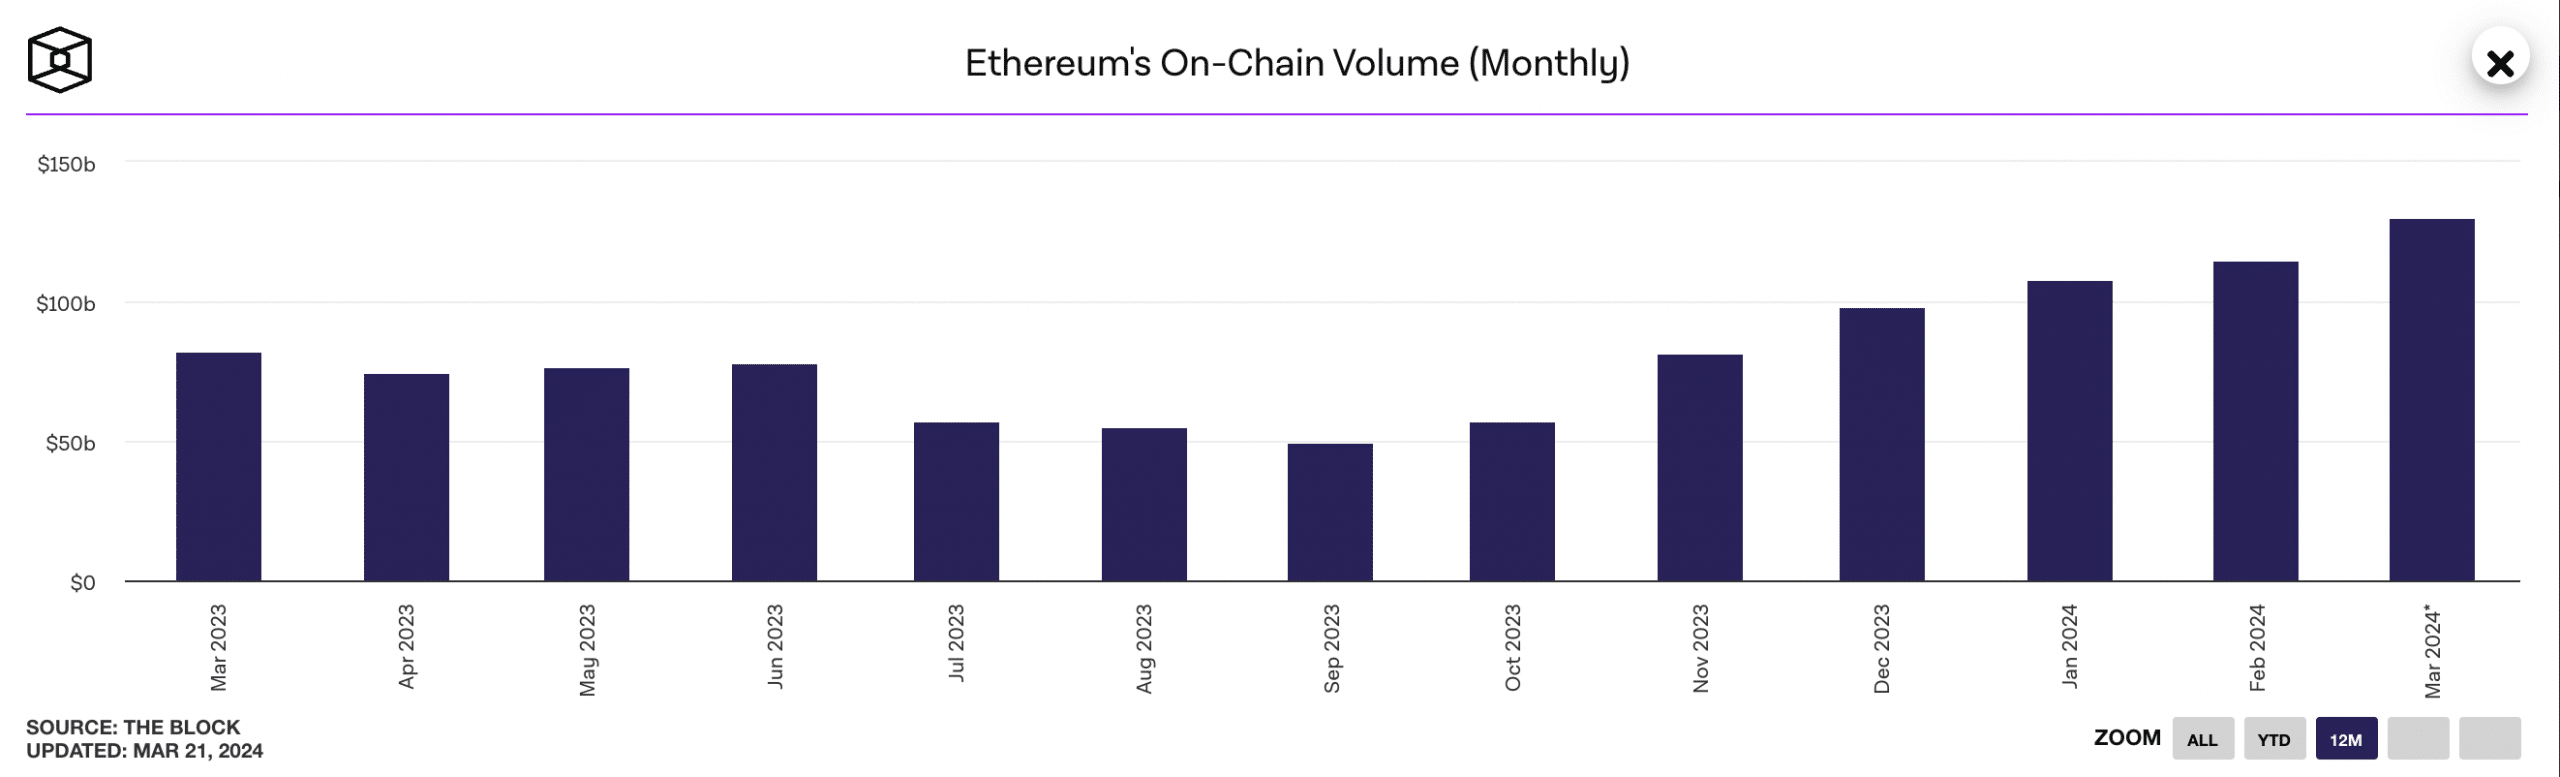 Ethereum On-Chain Volume